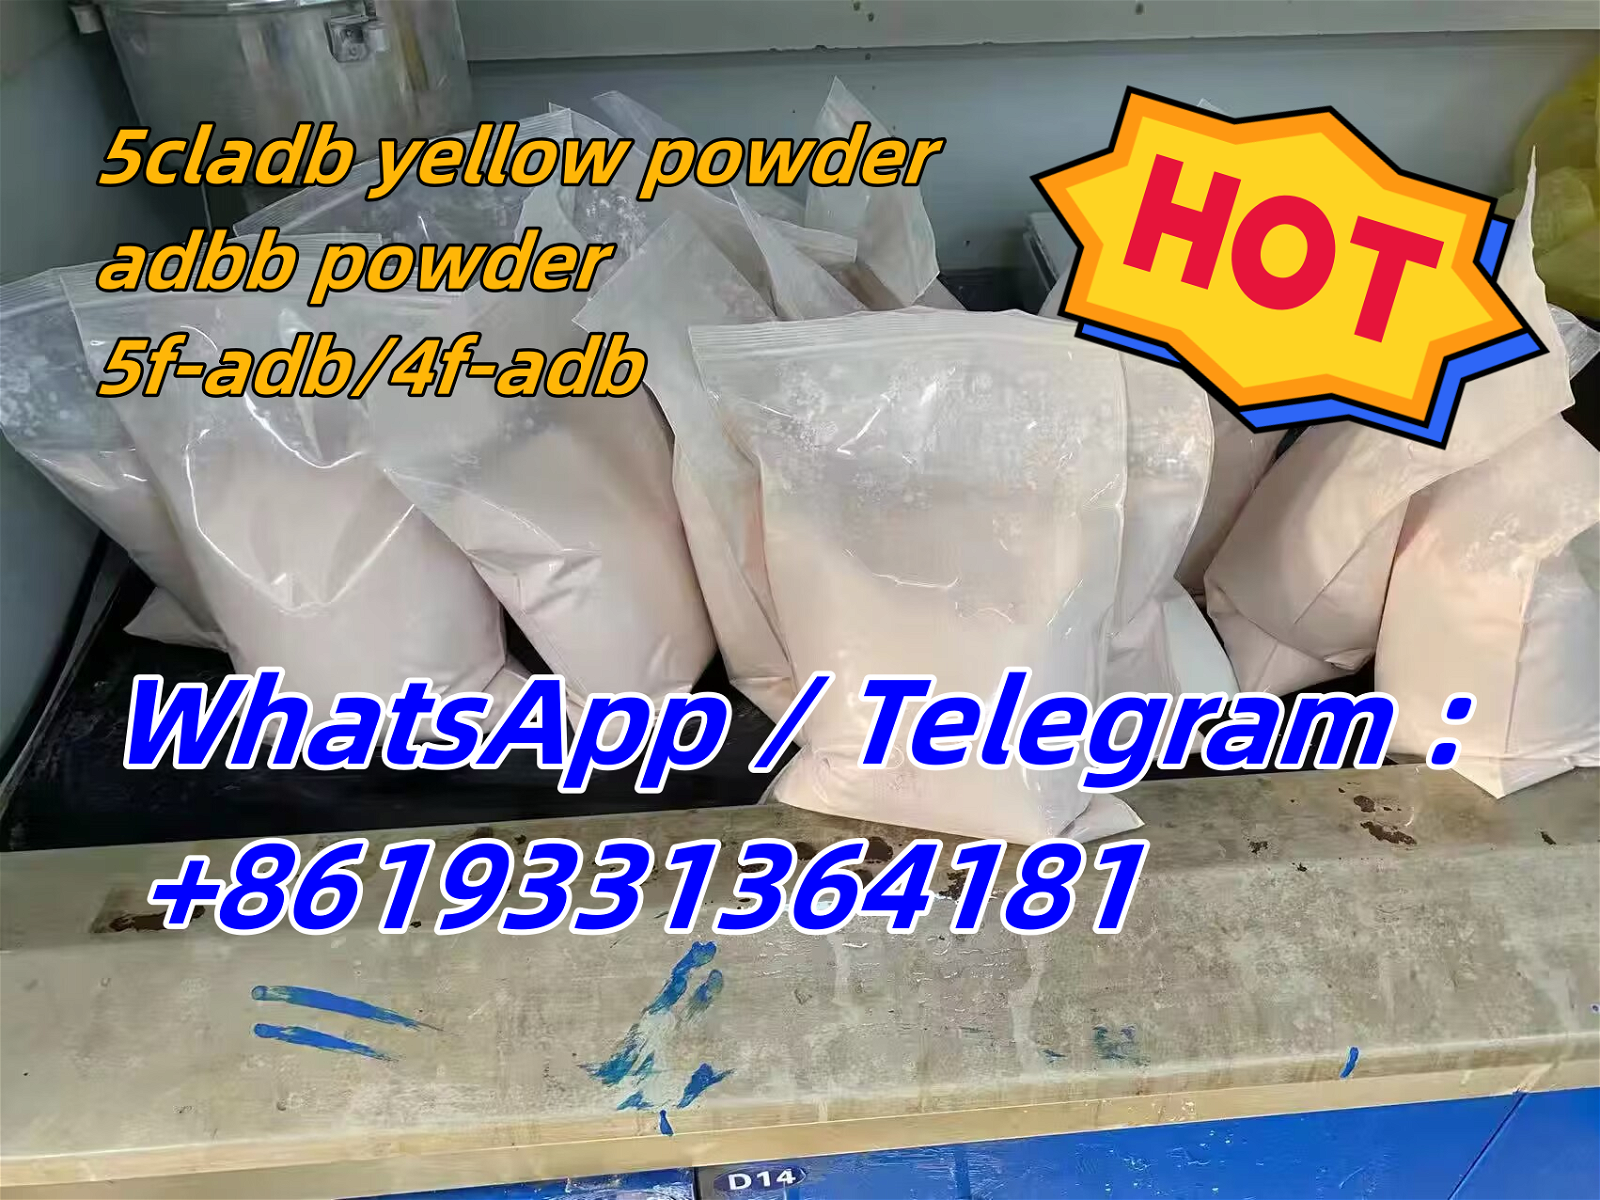 5cladb 5cl-adb-a yellow powder  cas 2504100-70-1 2